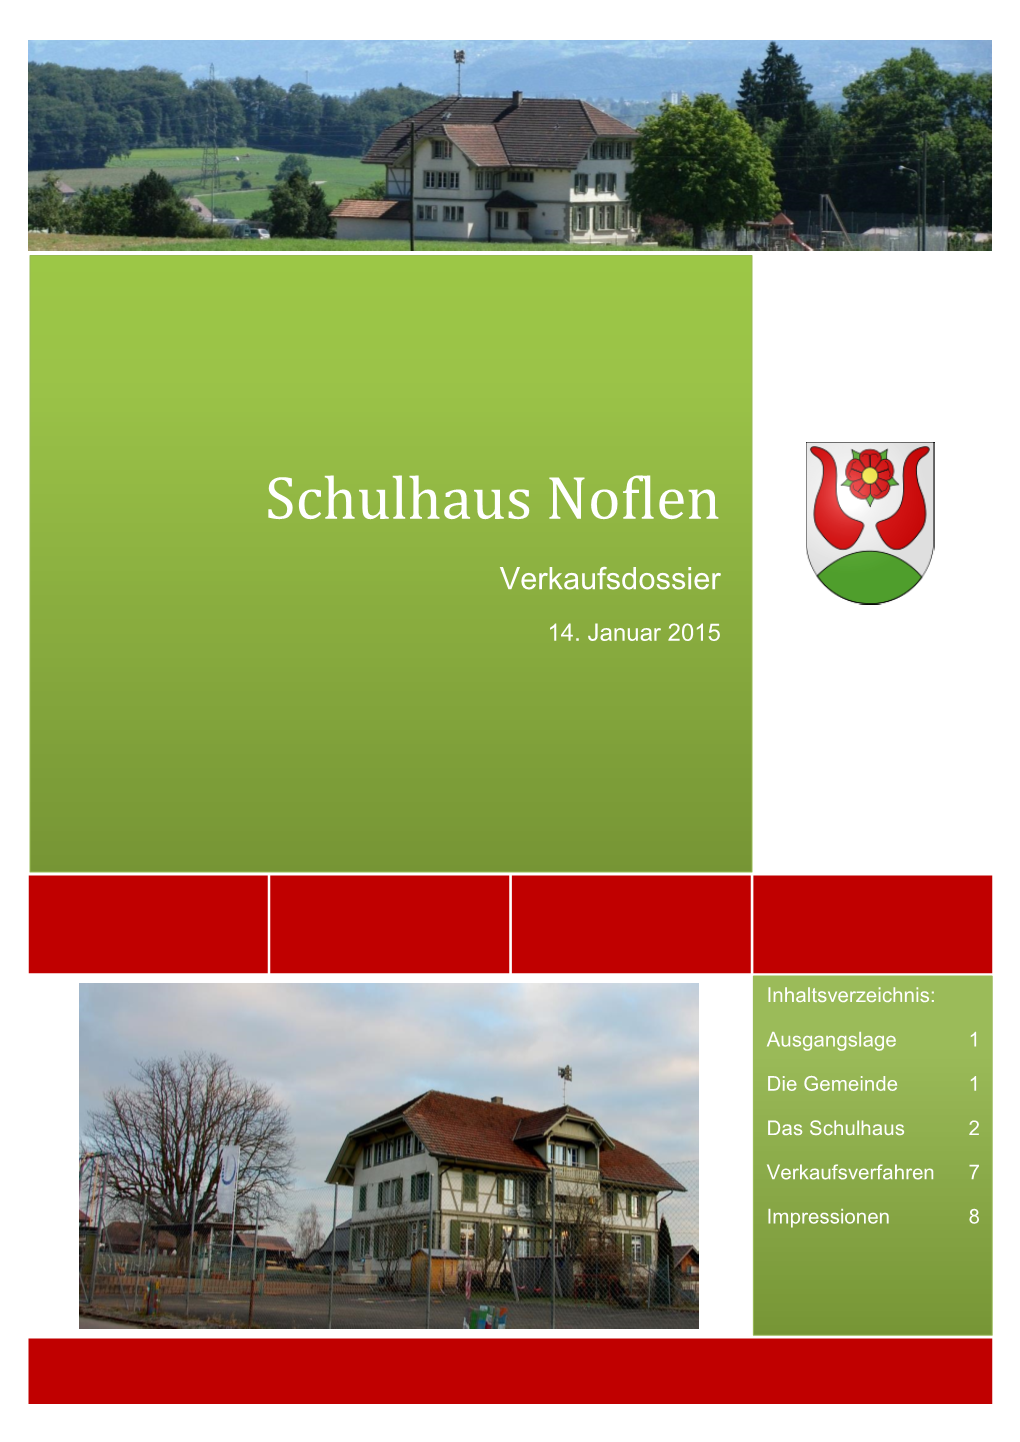 Schulhaus Noflen